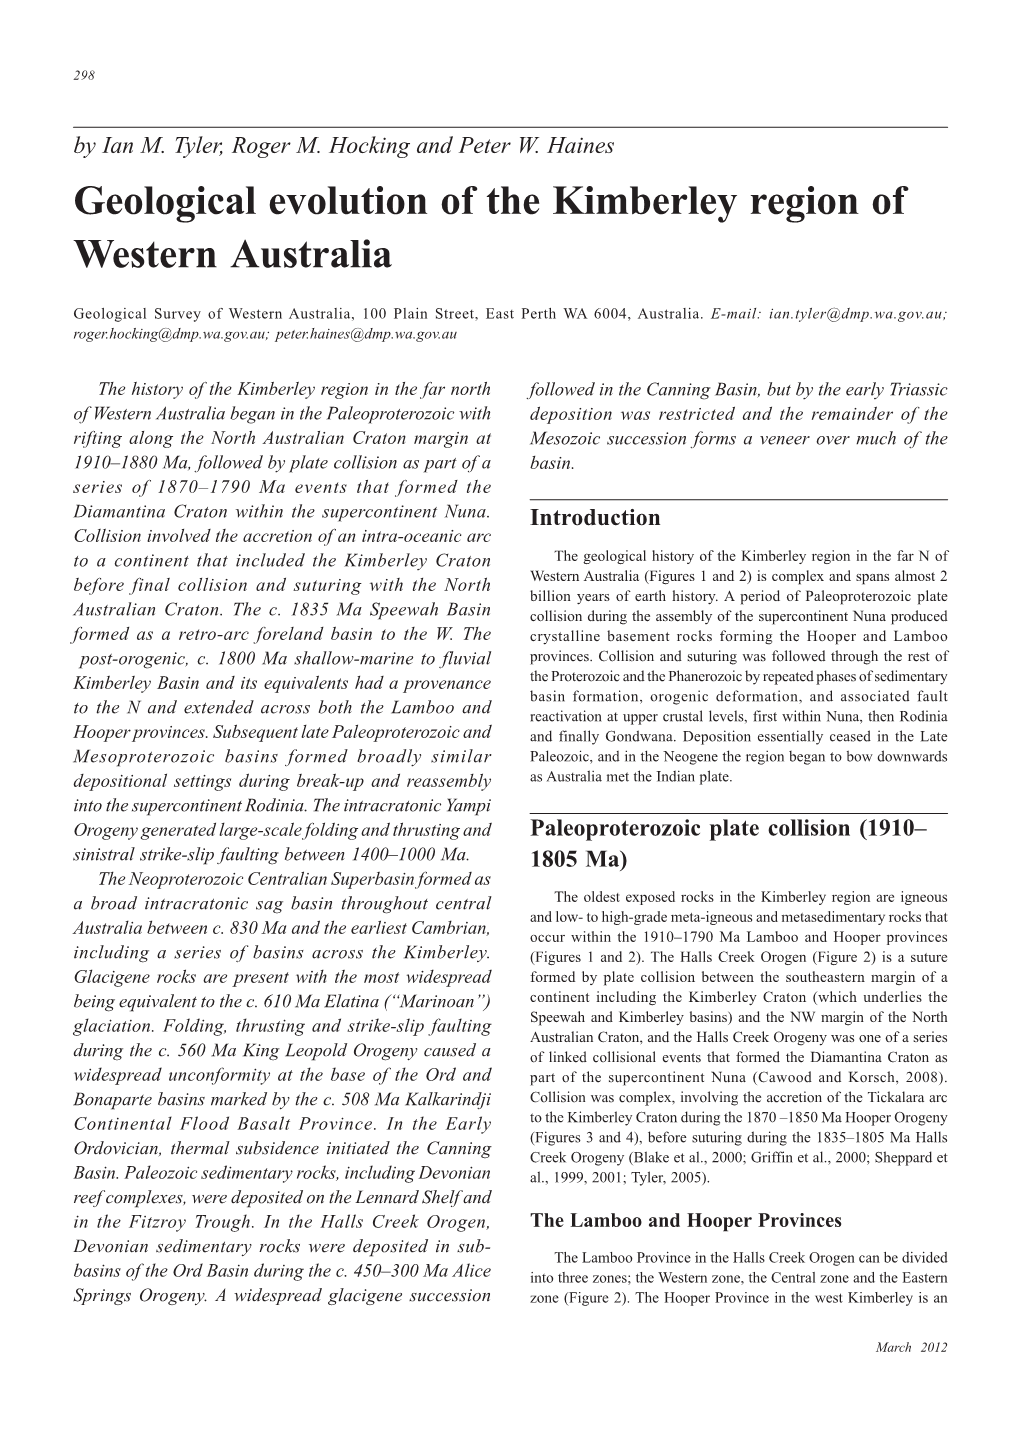 Geological Evolution of the Kimberley Region of Western Australia